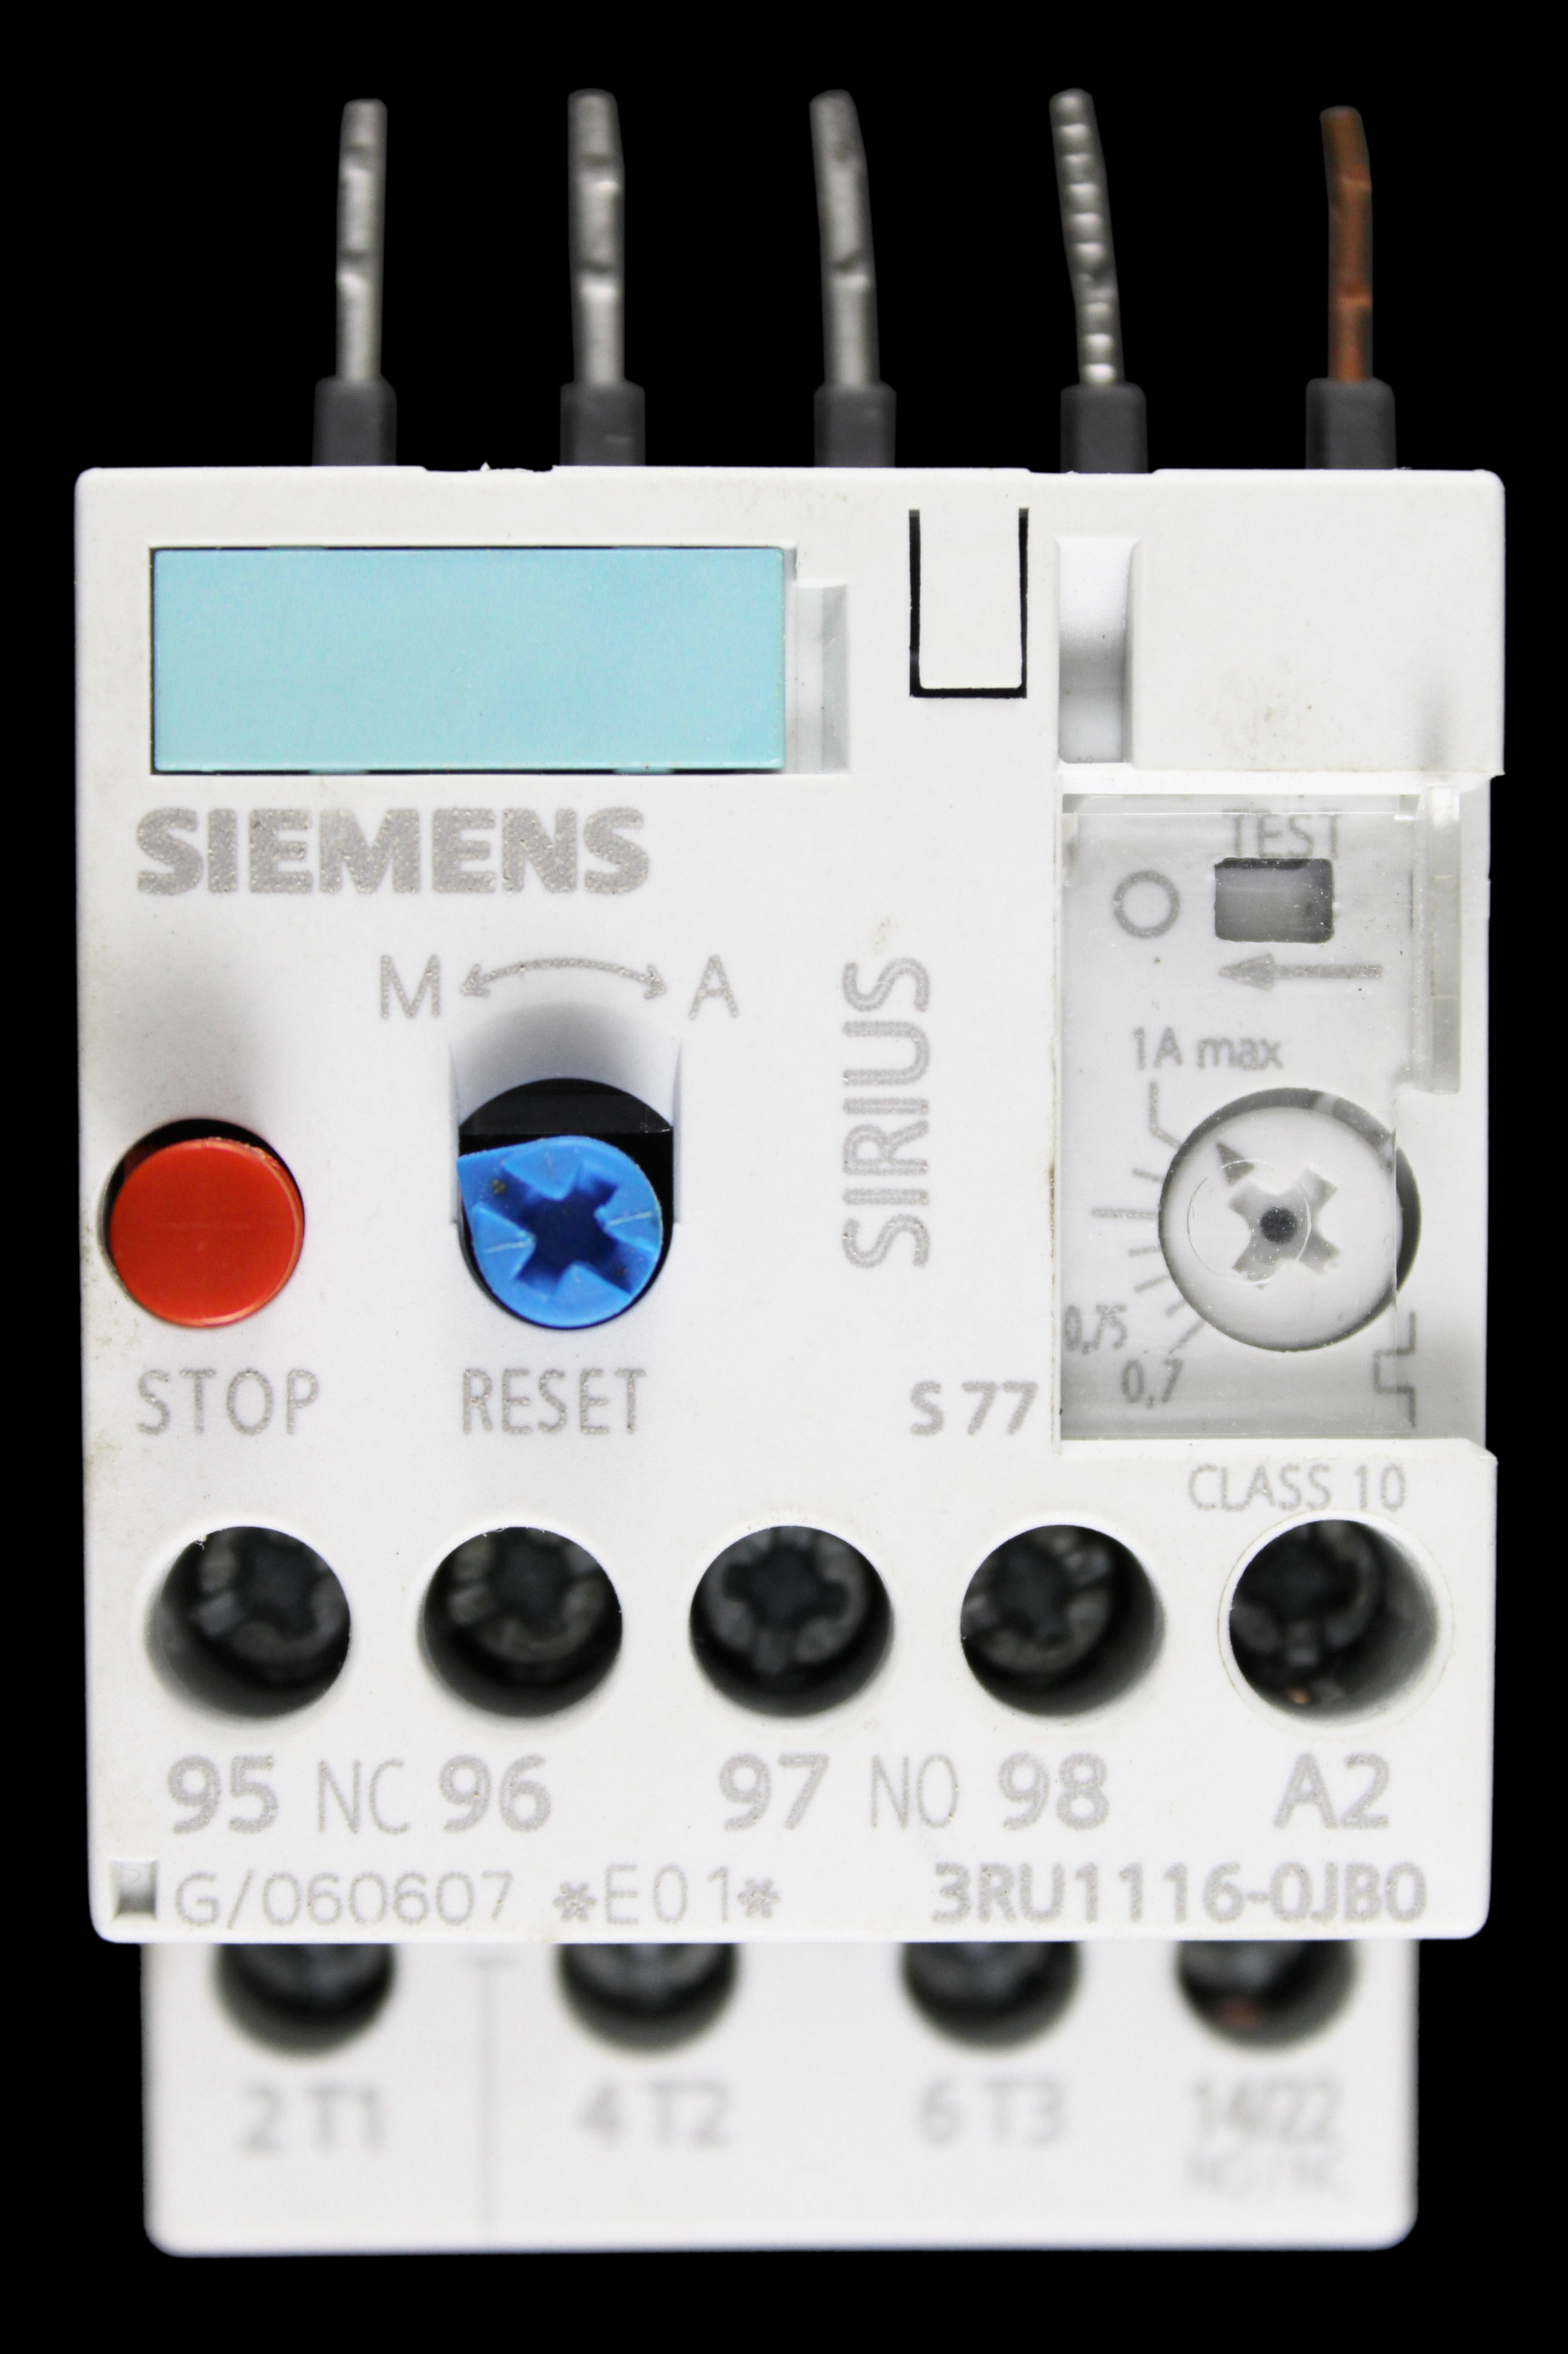 SIEMENS 0.7 - 1 AMP OVERLOAD RELAY 3RU1116-0JB0